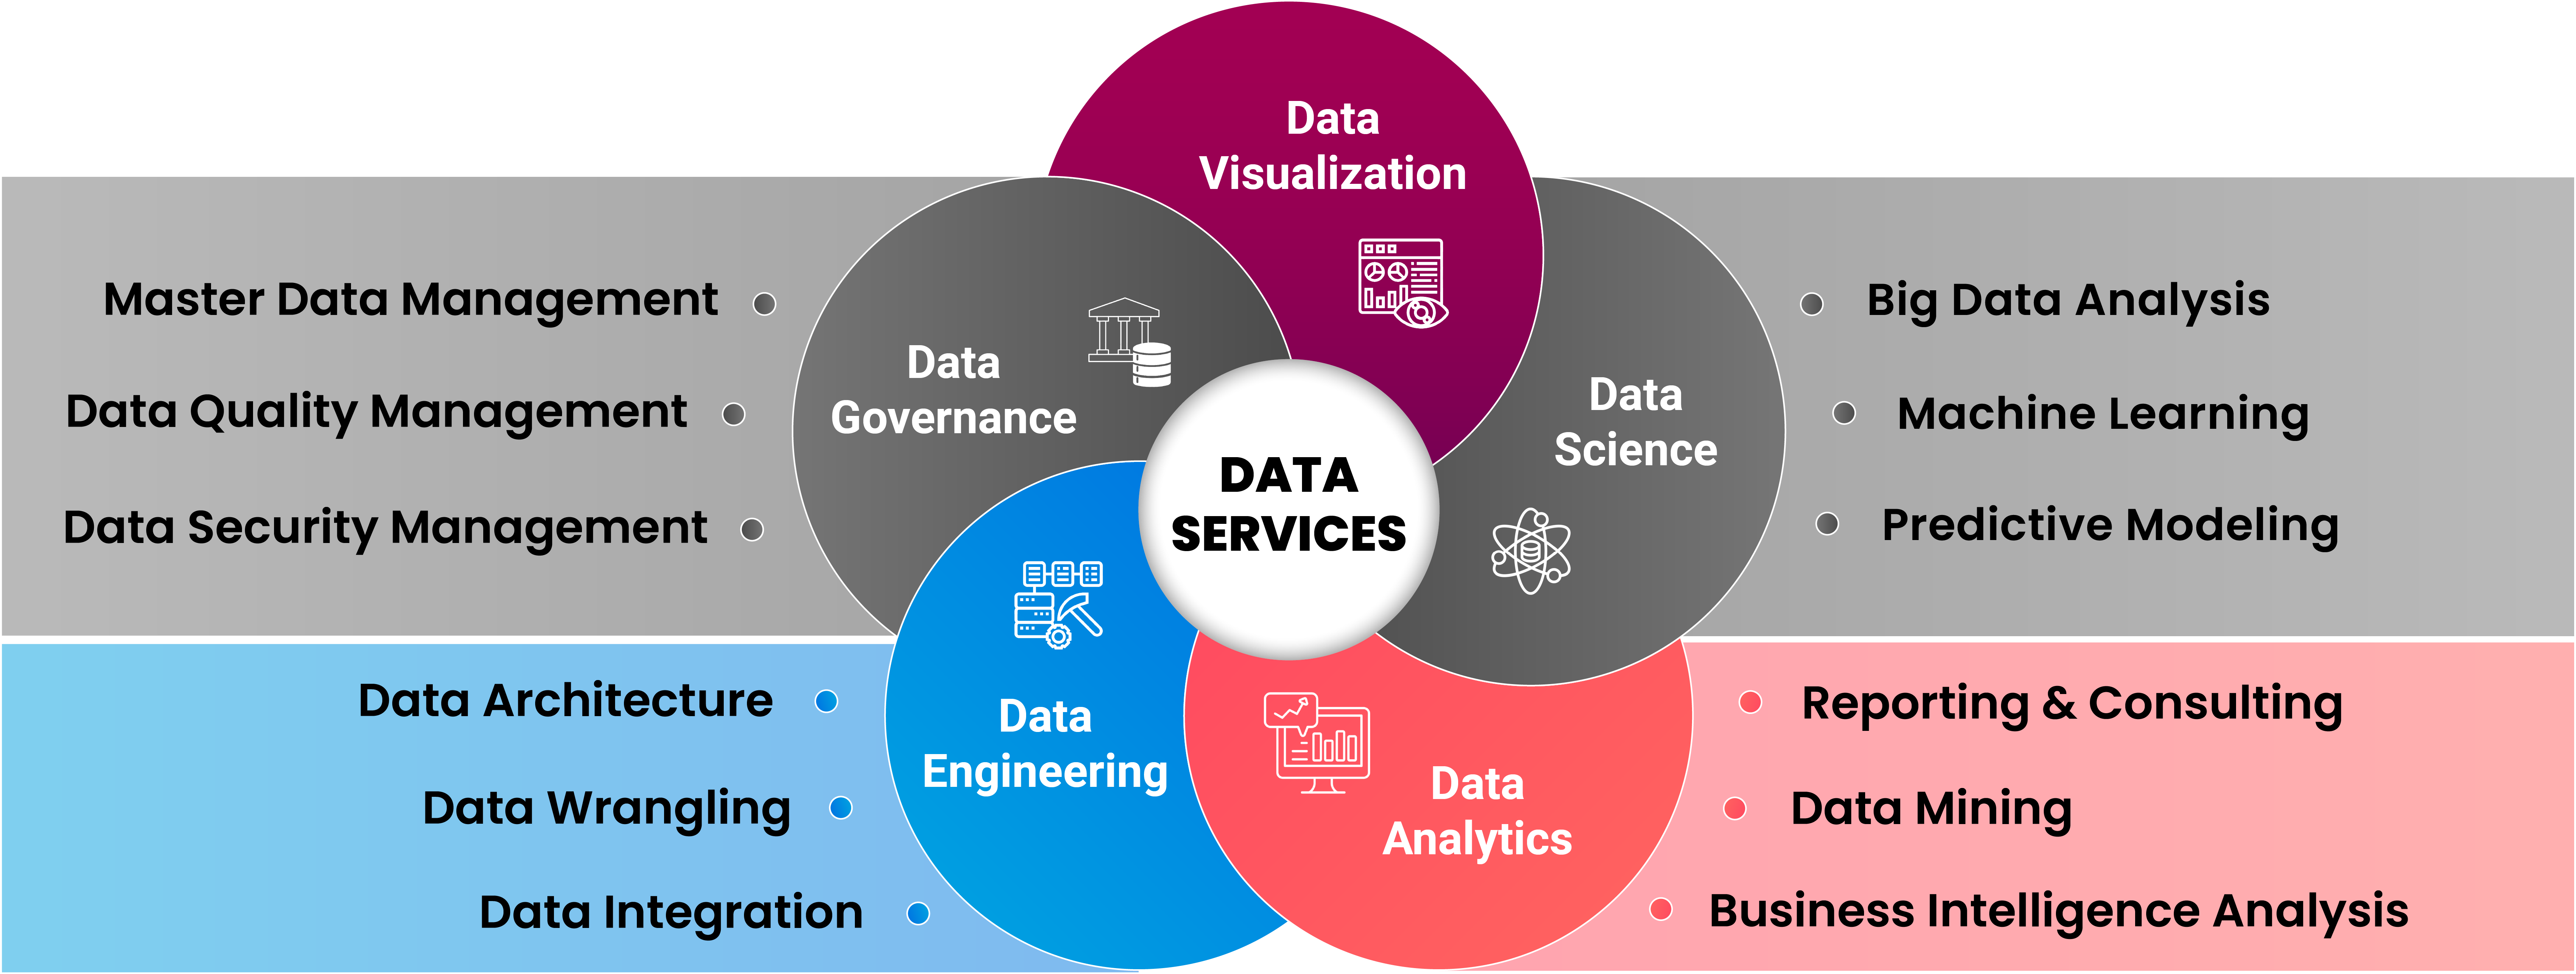 Data Analytics as a Service